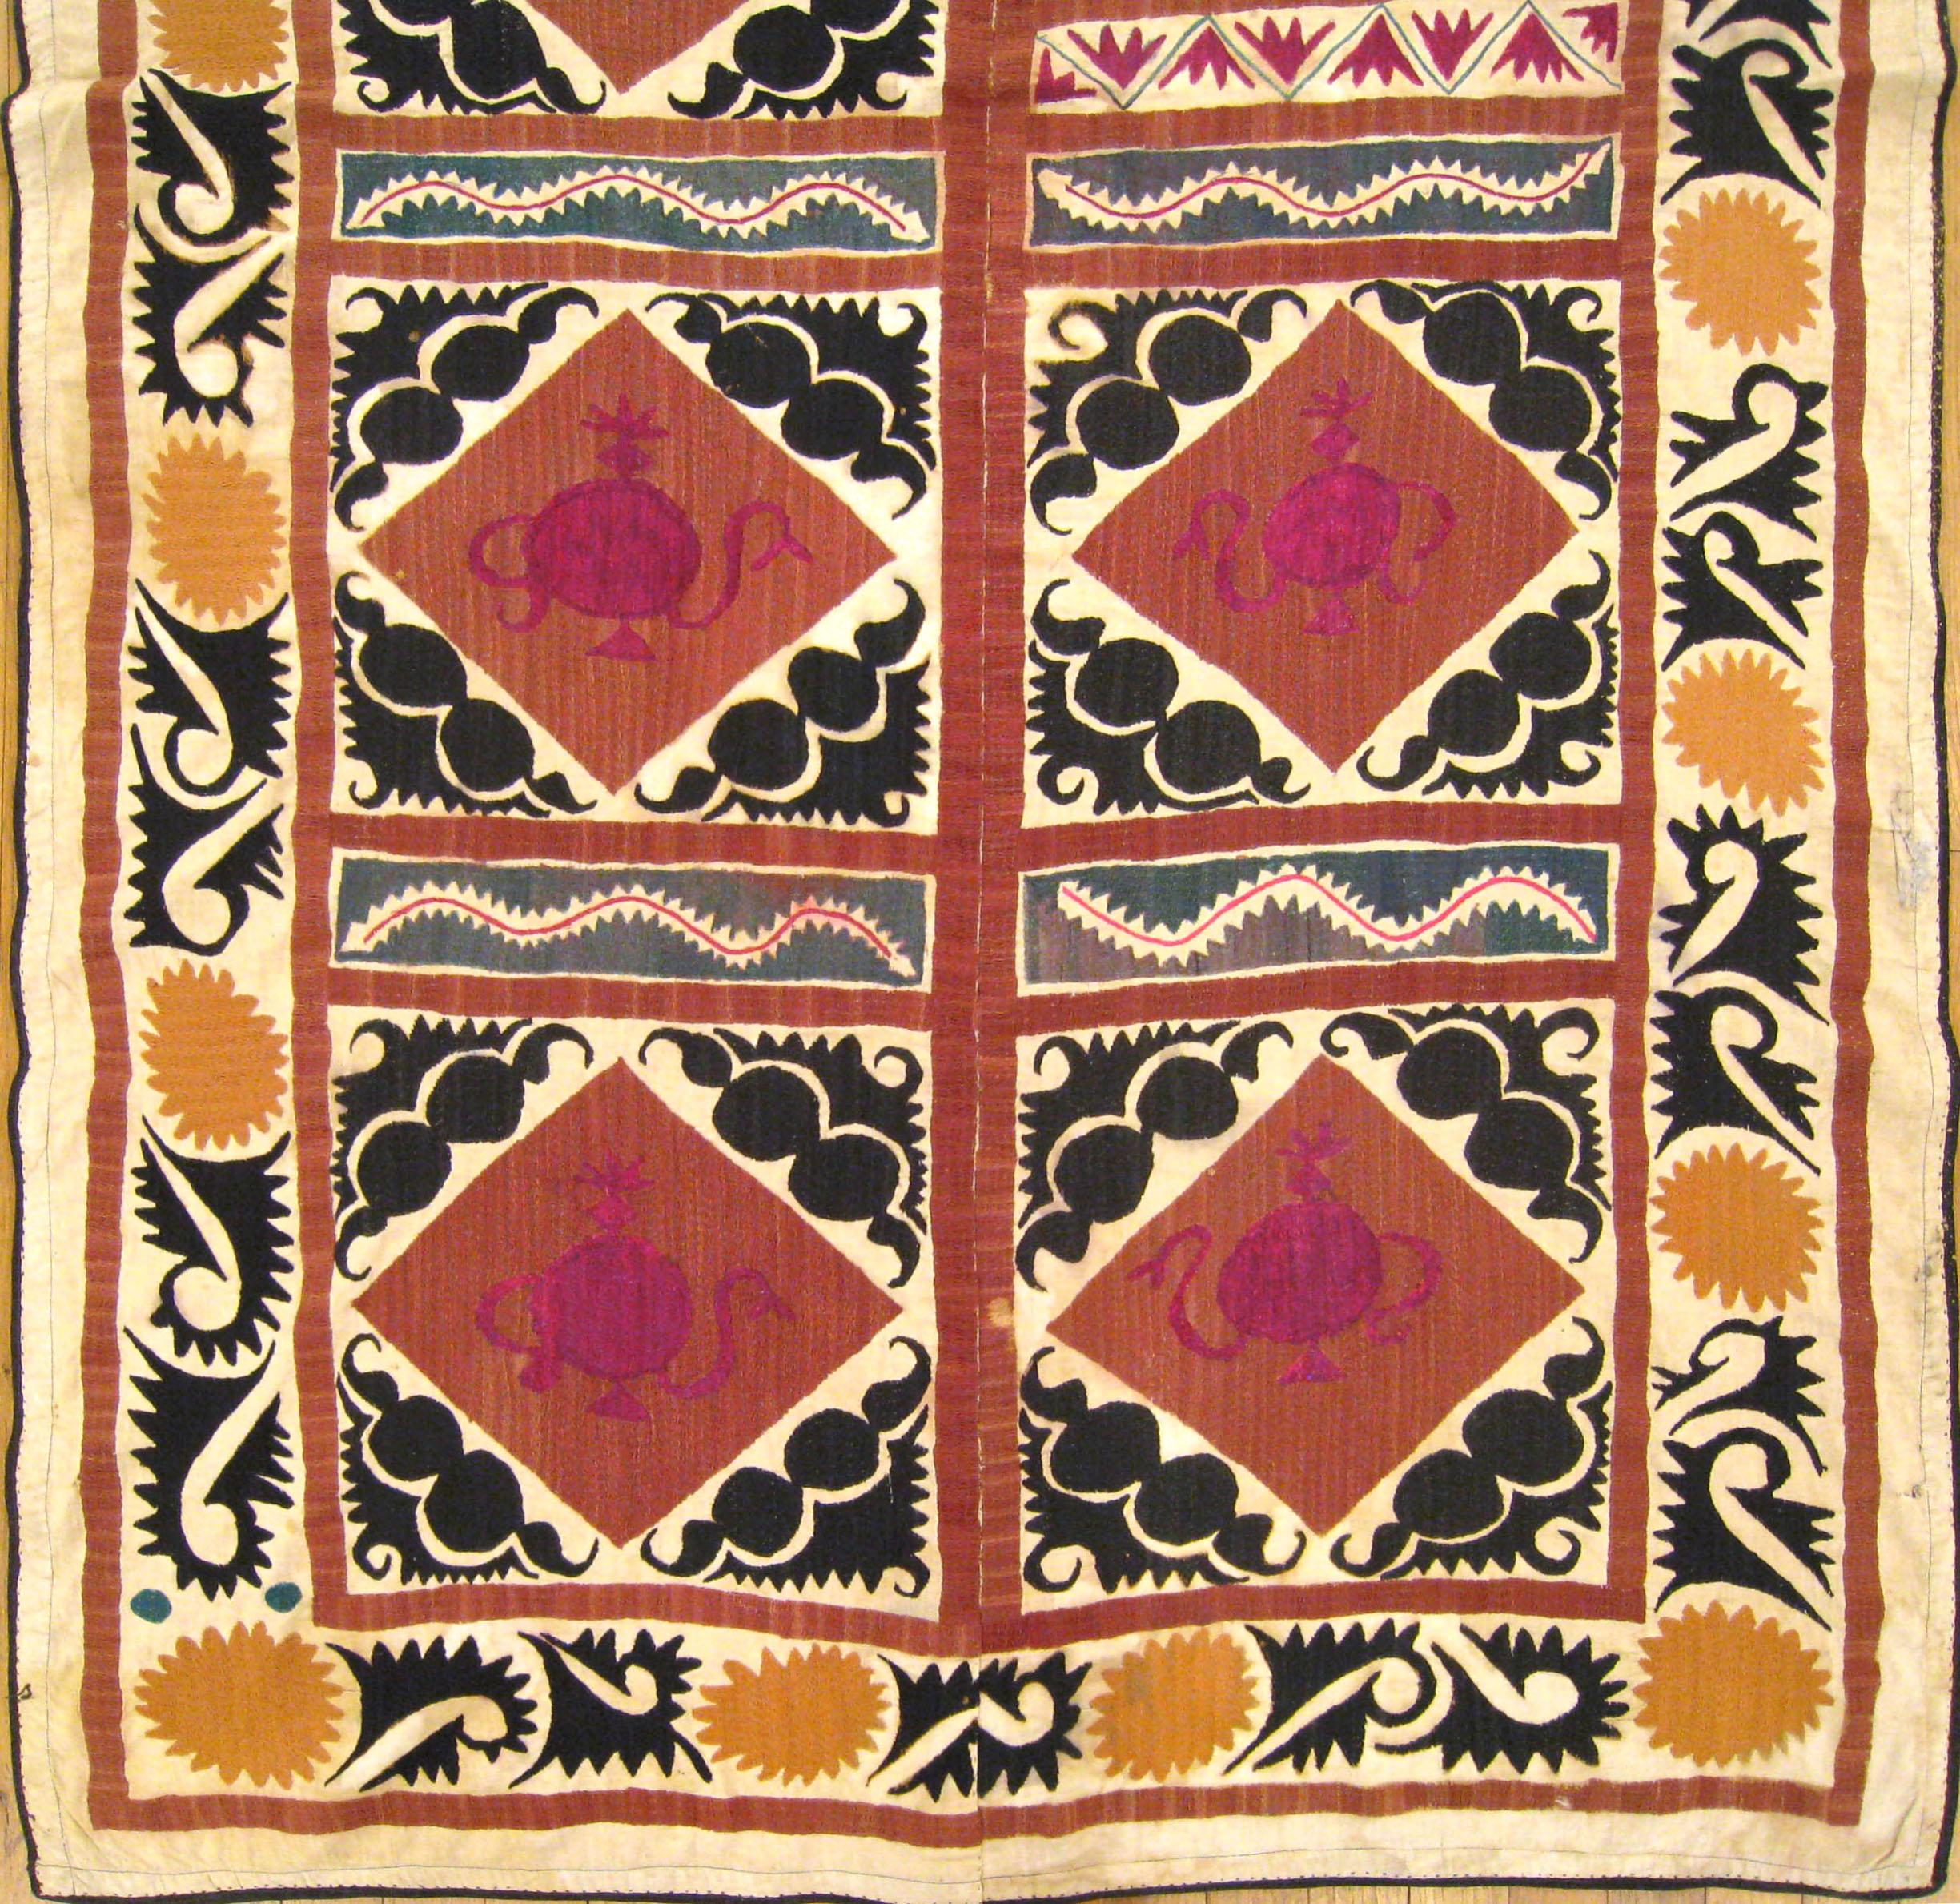 Uzbek Antique Decorative Suzani Textile, Repeat Design, Wall Hanging & Floor Covering For Sale